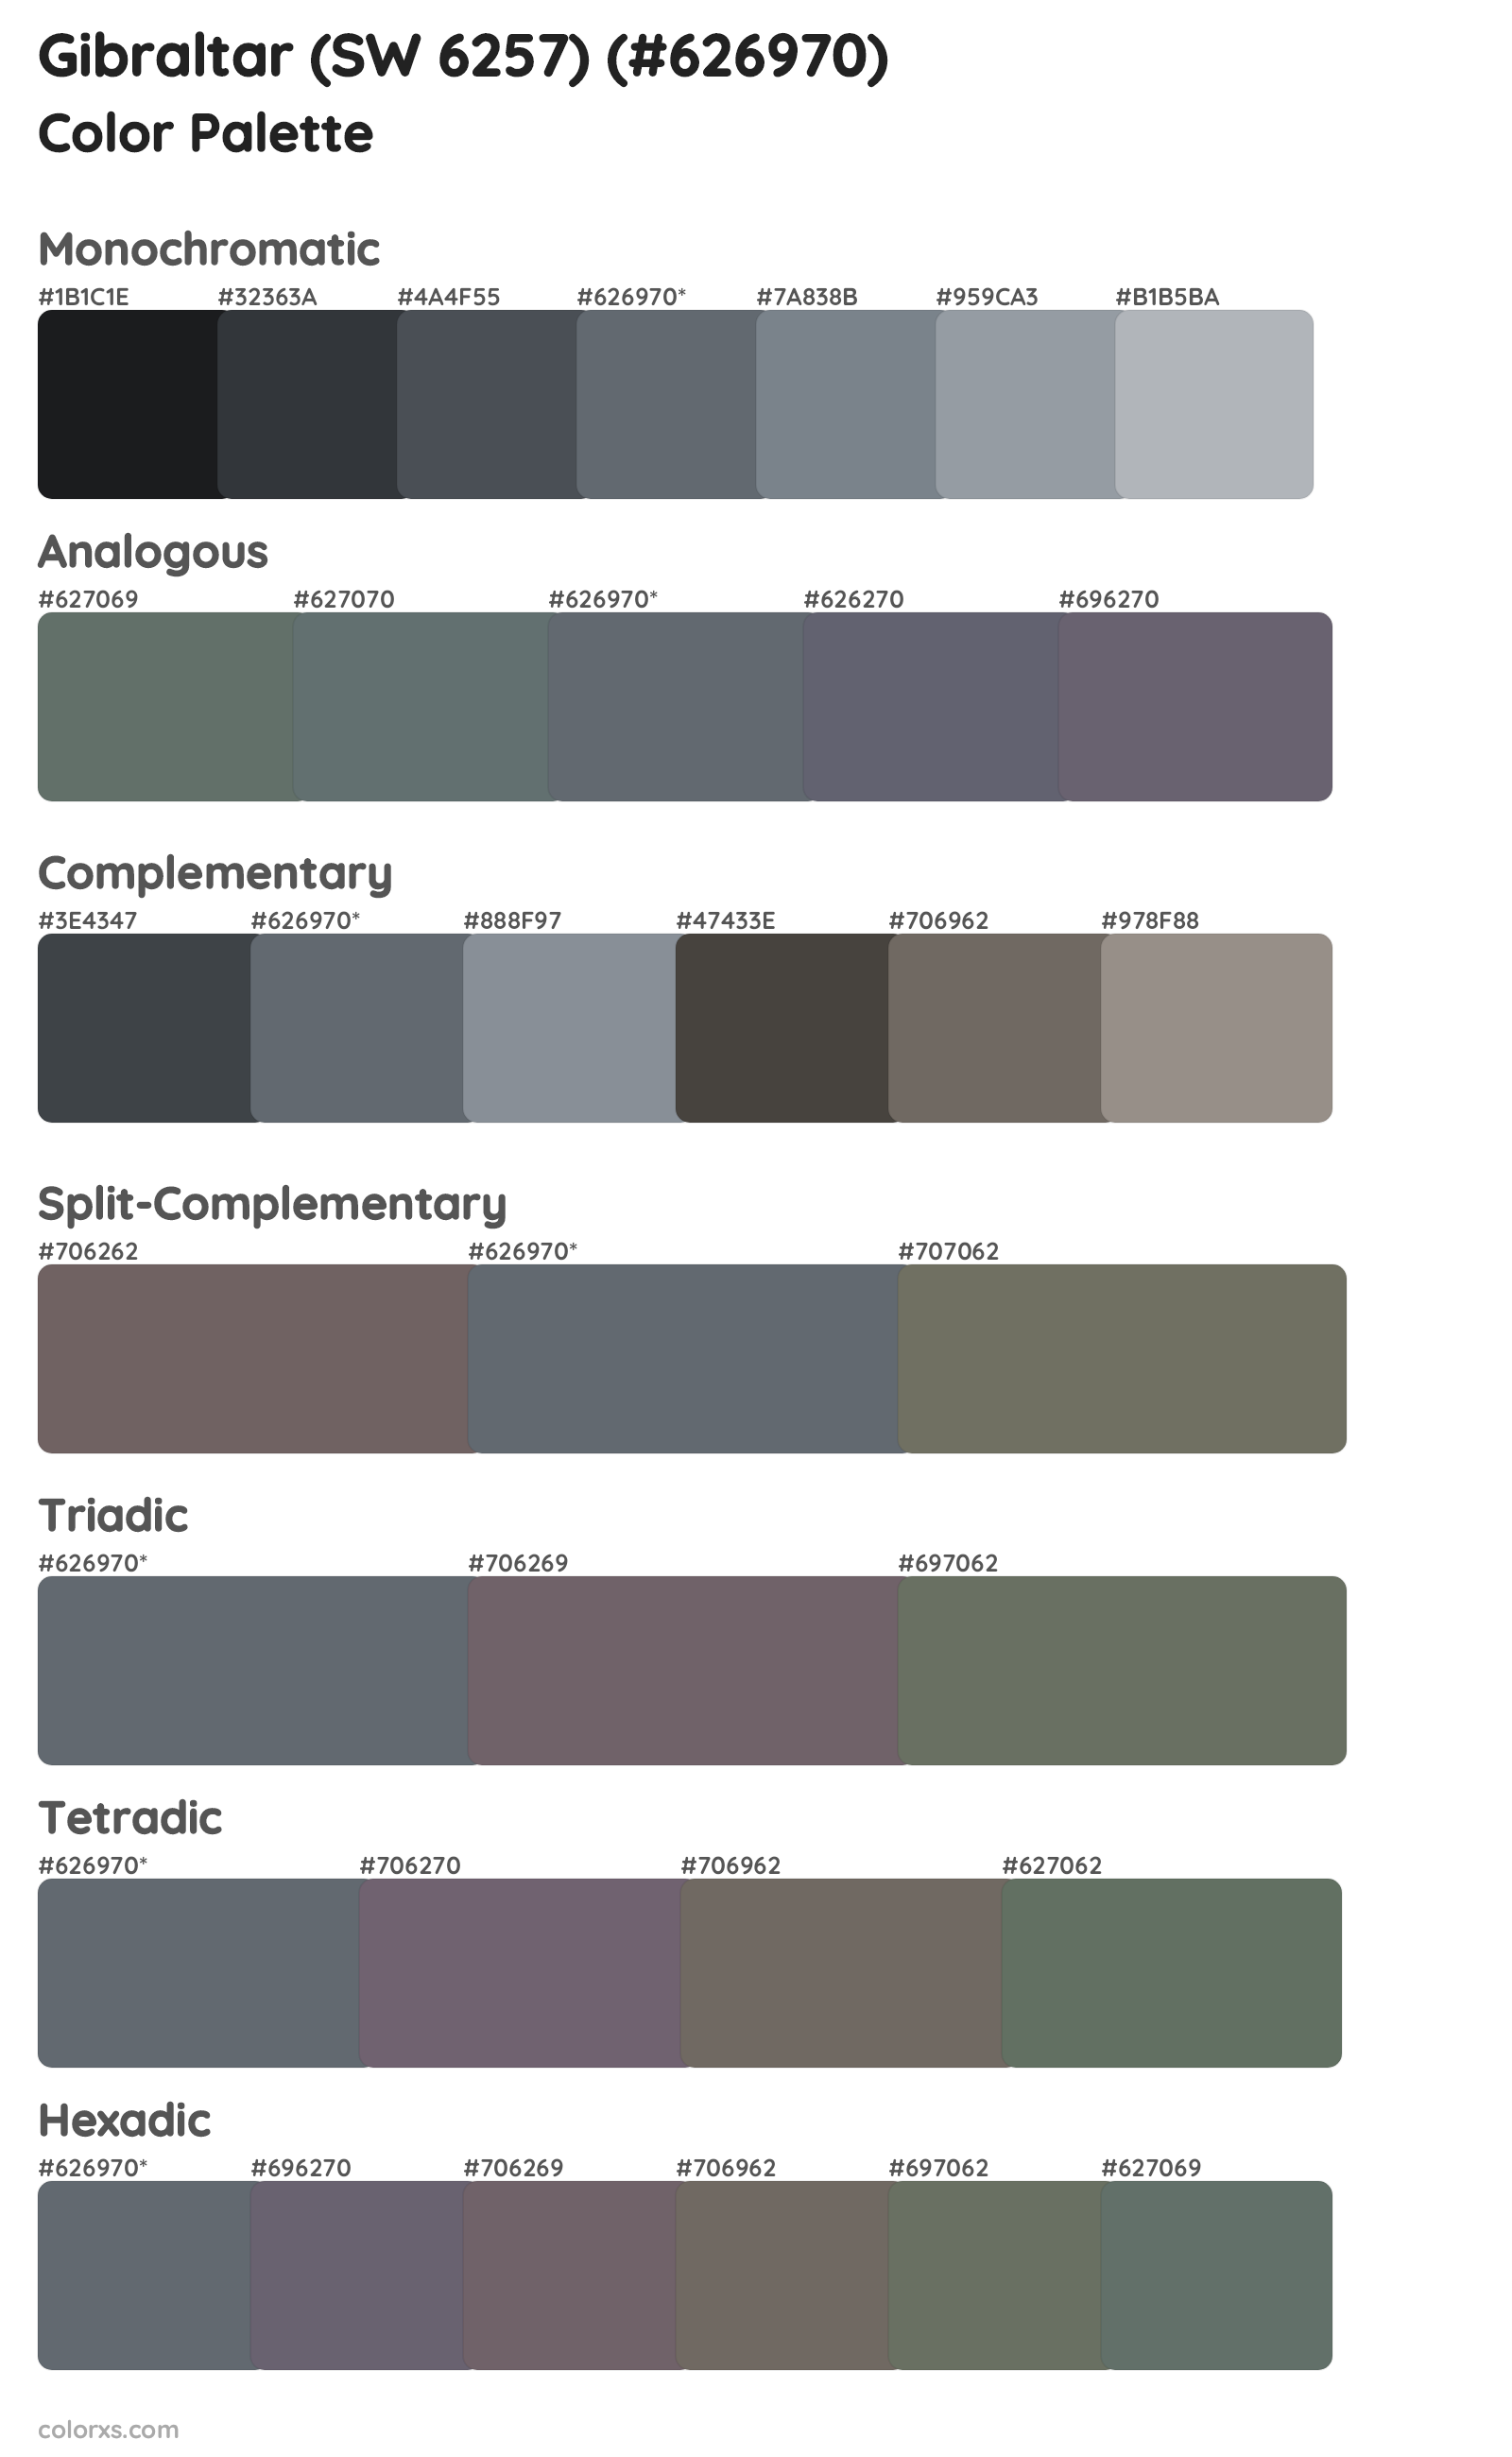 Gibraltar (SW 6257) Color Scheme Palettes